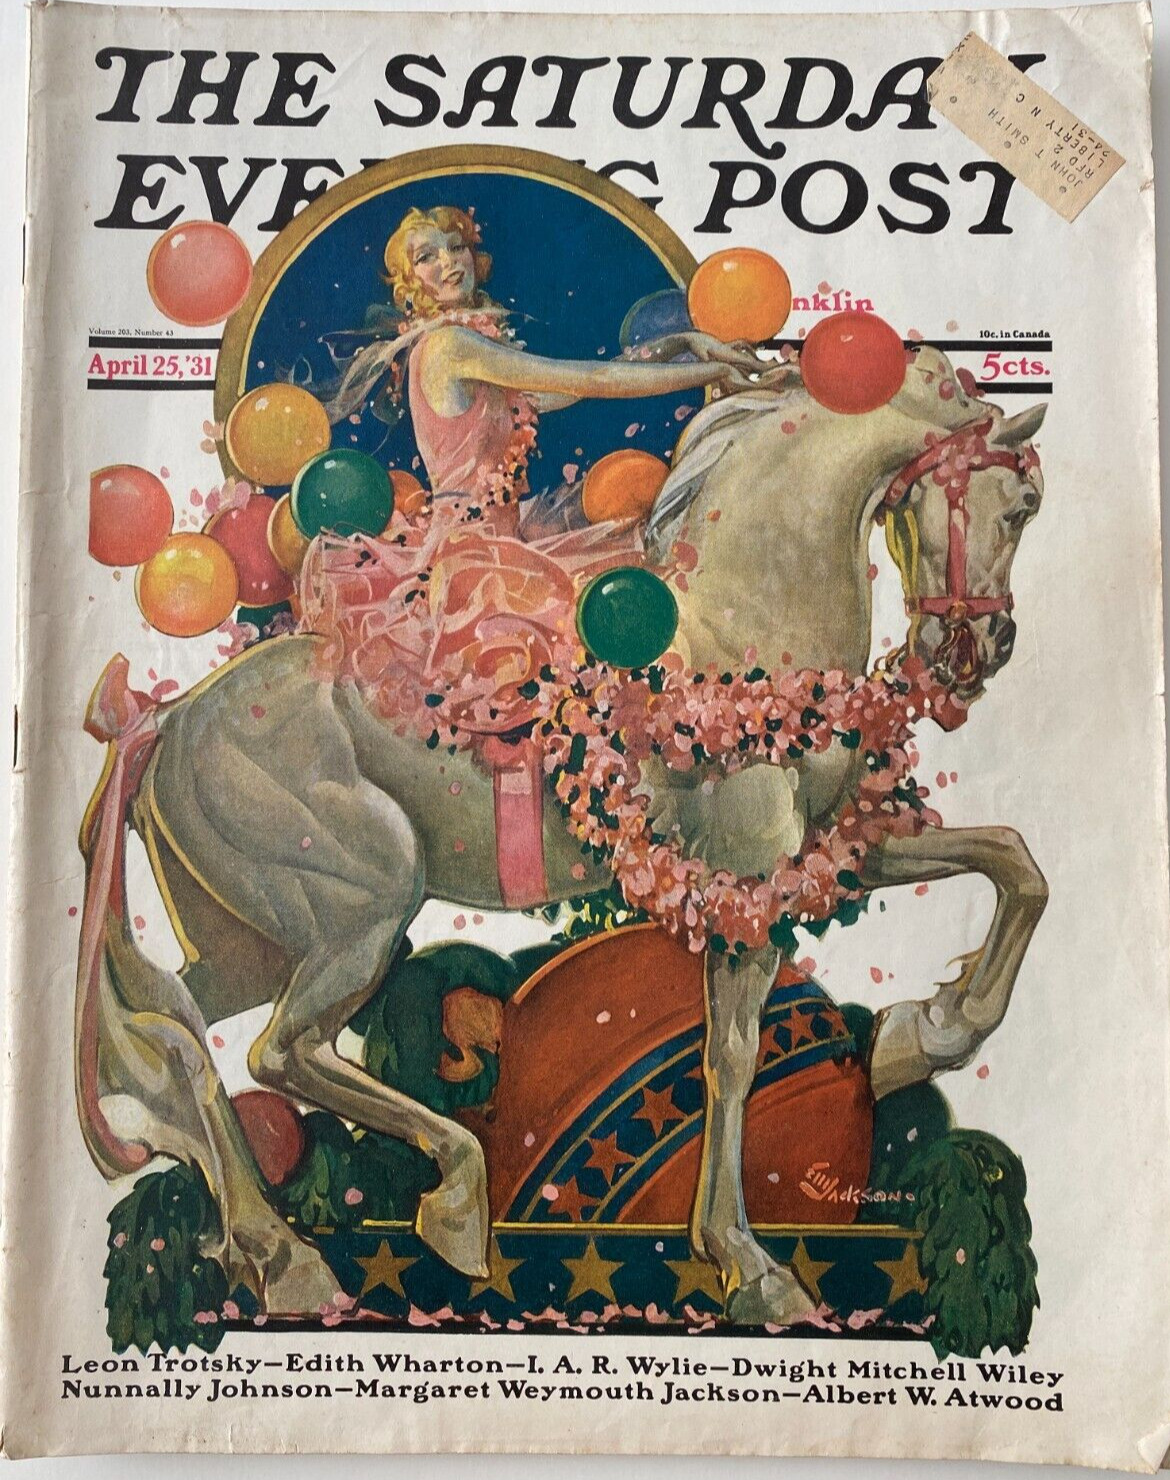 1931 Saturday Evening Post E.M. Jackson Woman horse April 25 Leon Trotsky